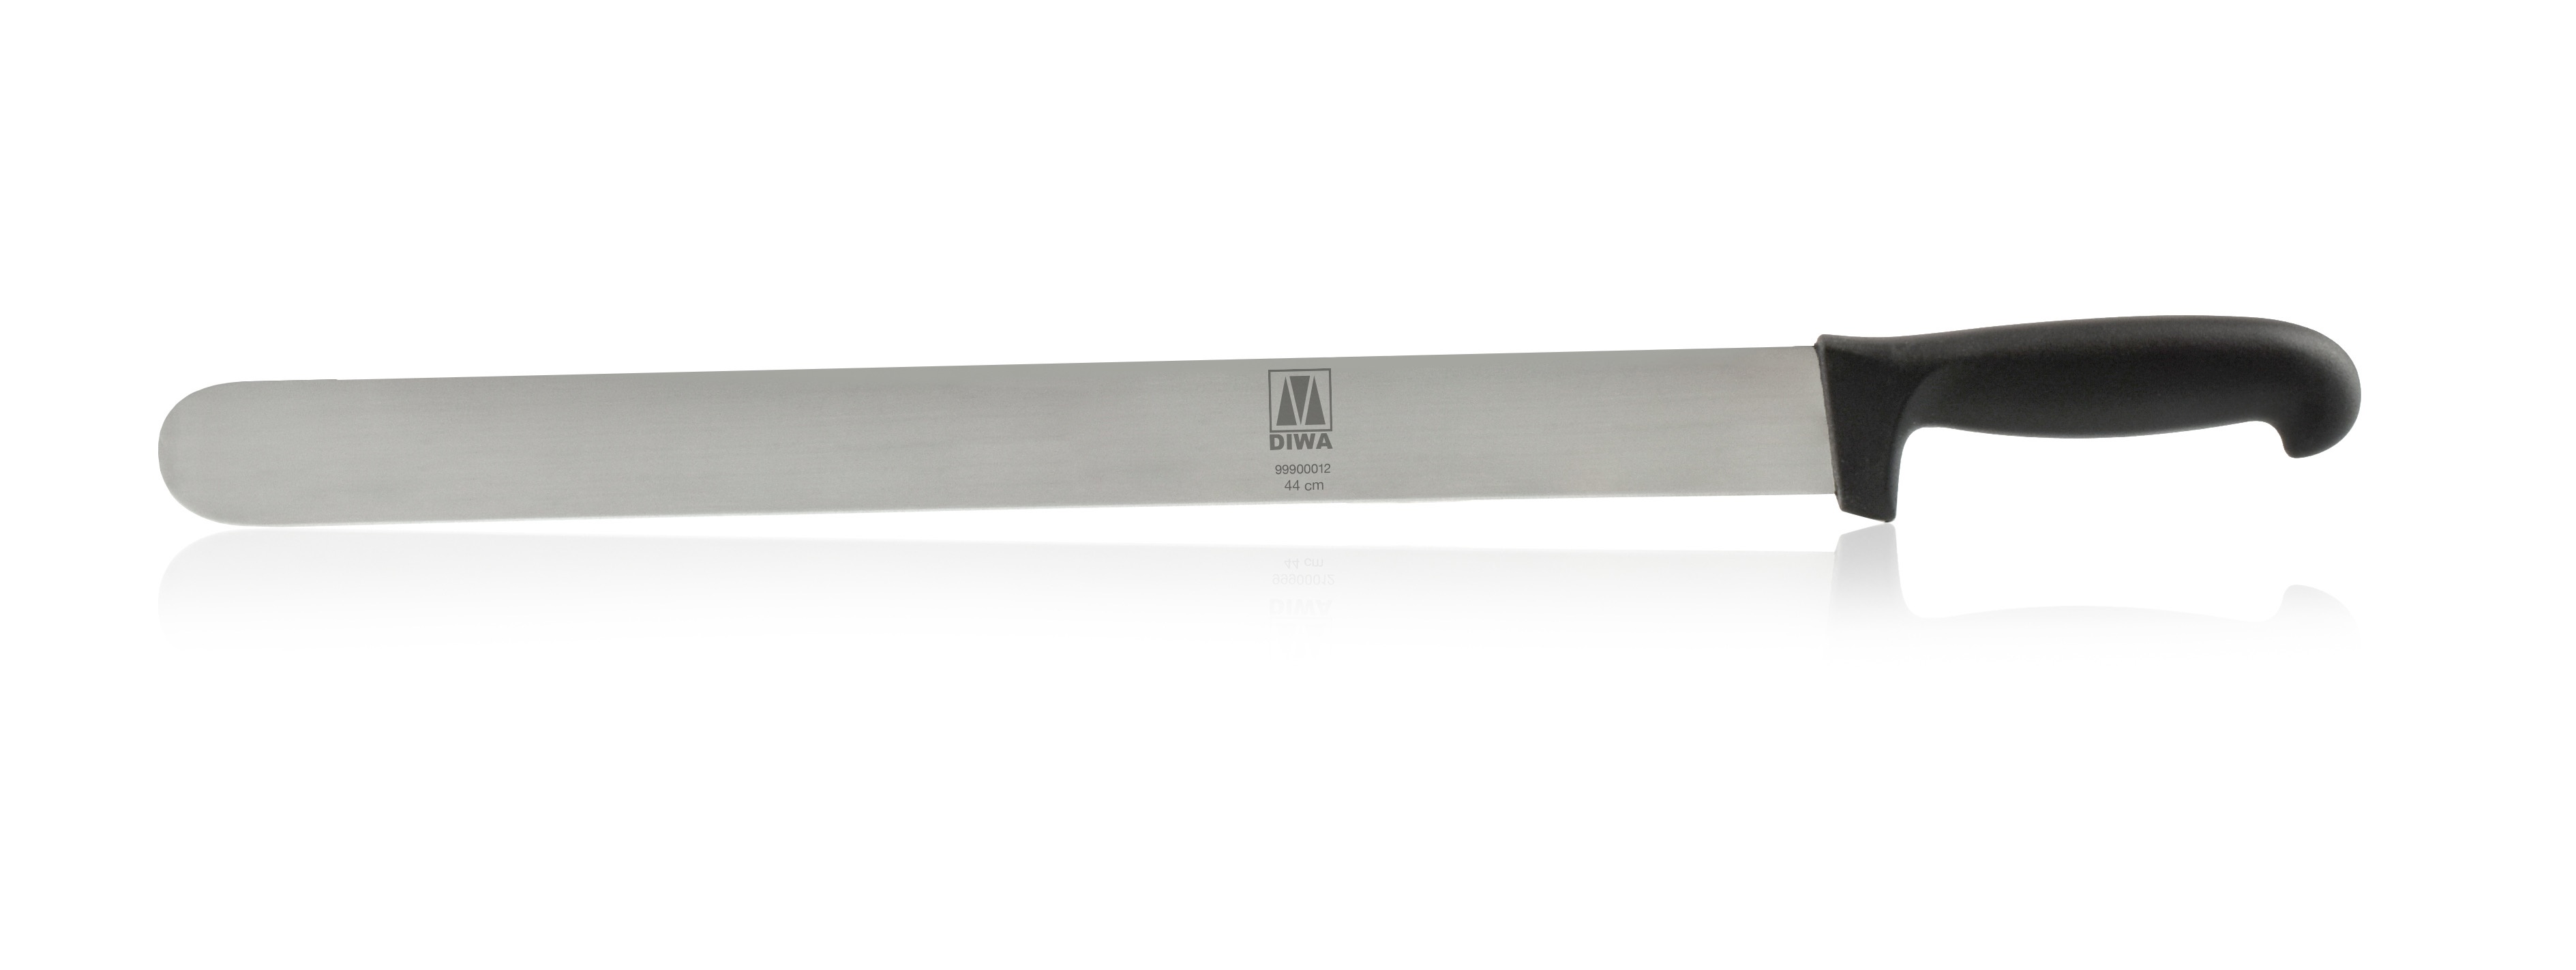 DIWA Shape cut sabre with plastic handle - 44 cm - handle black